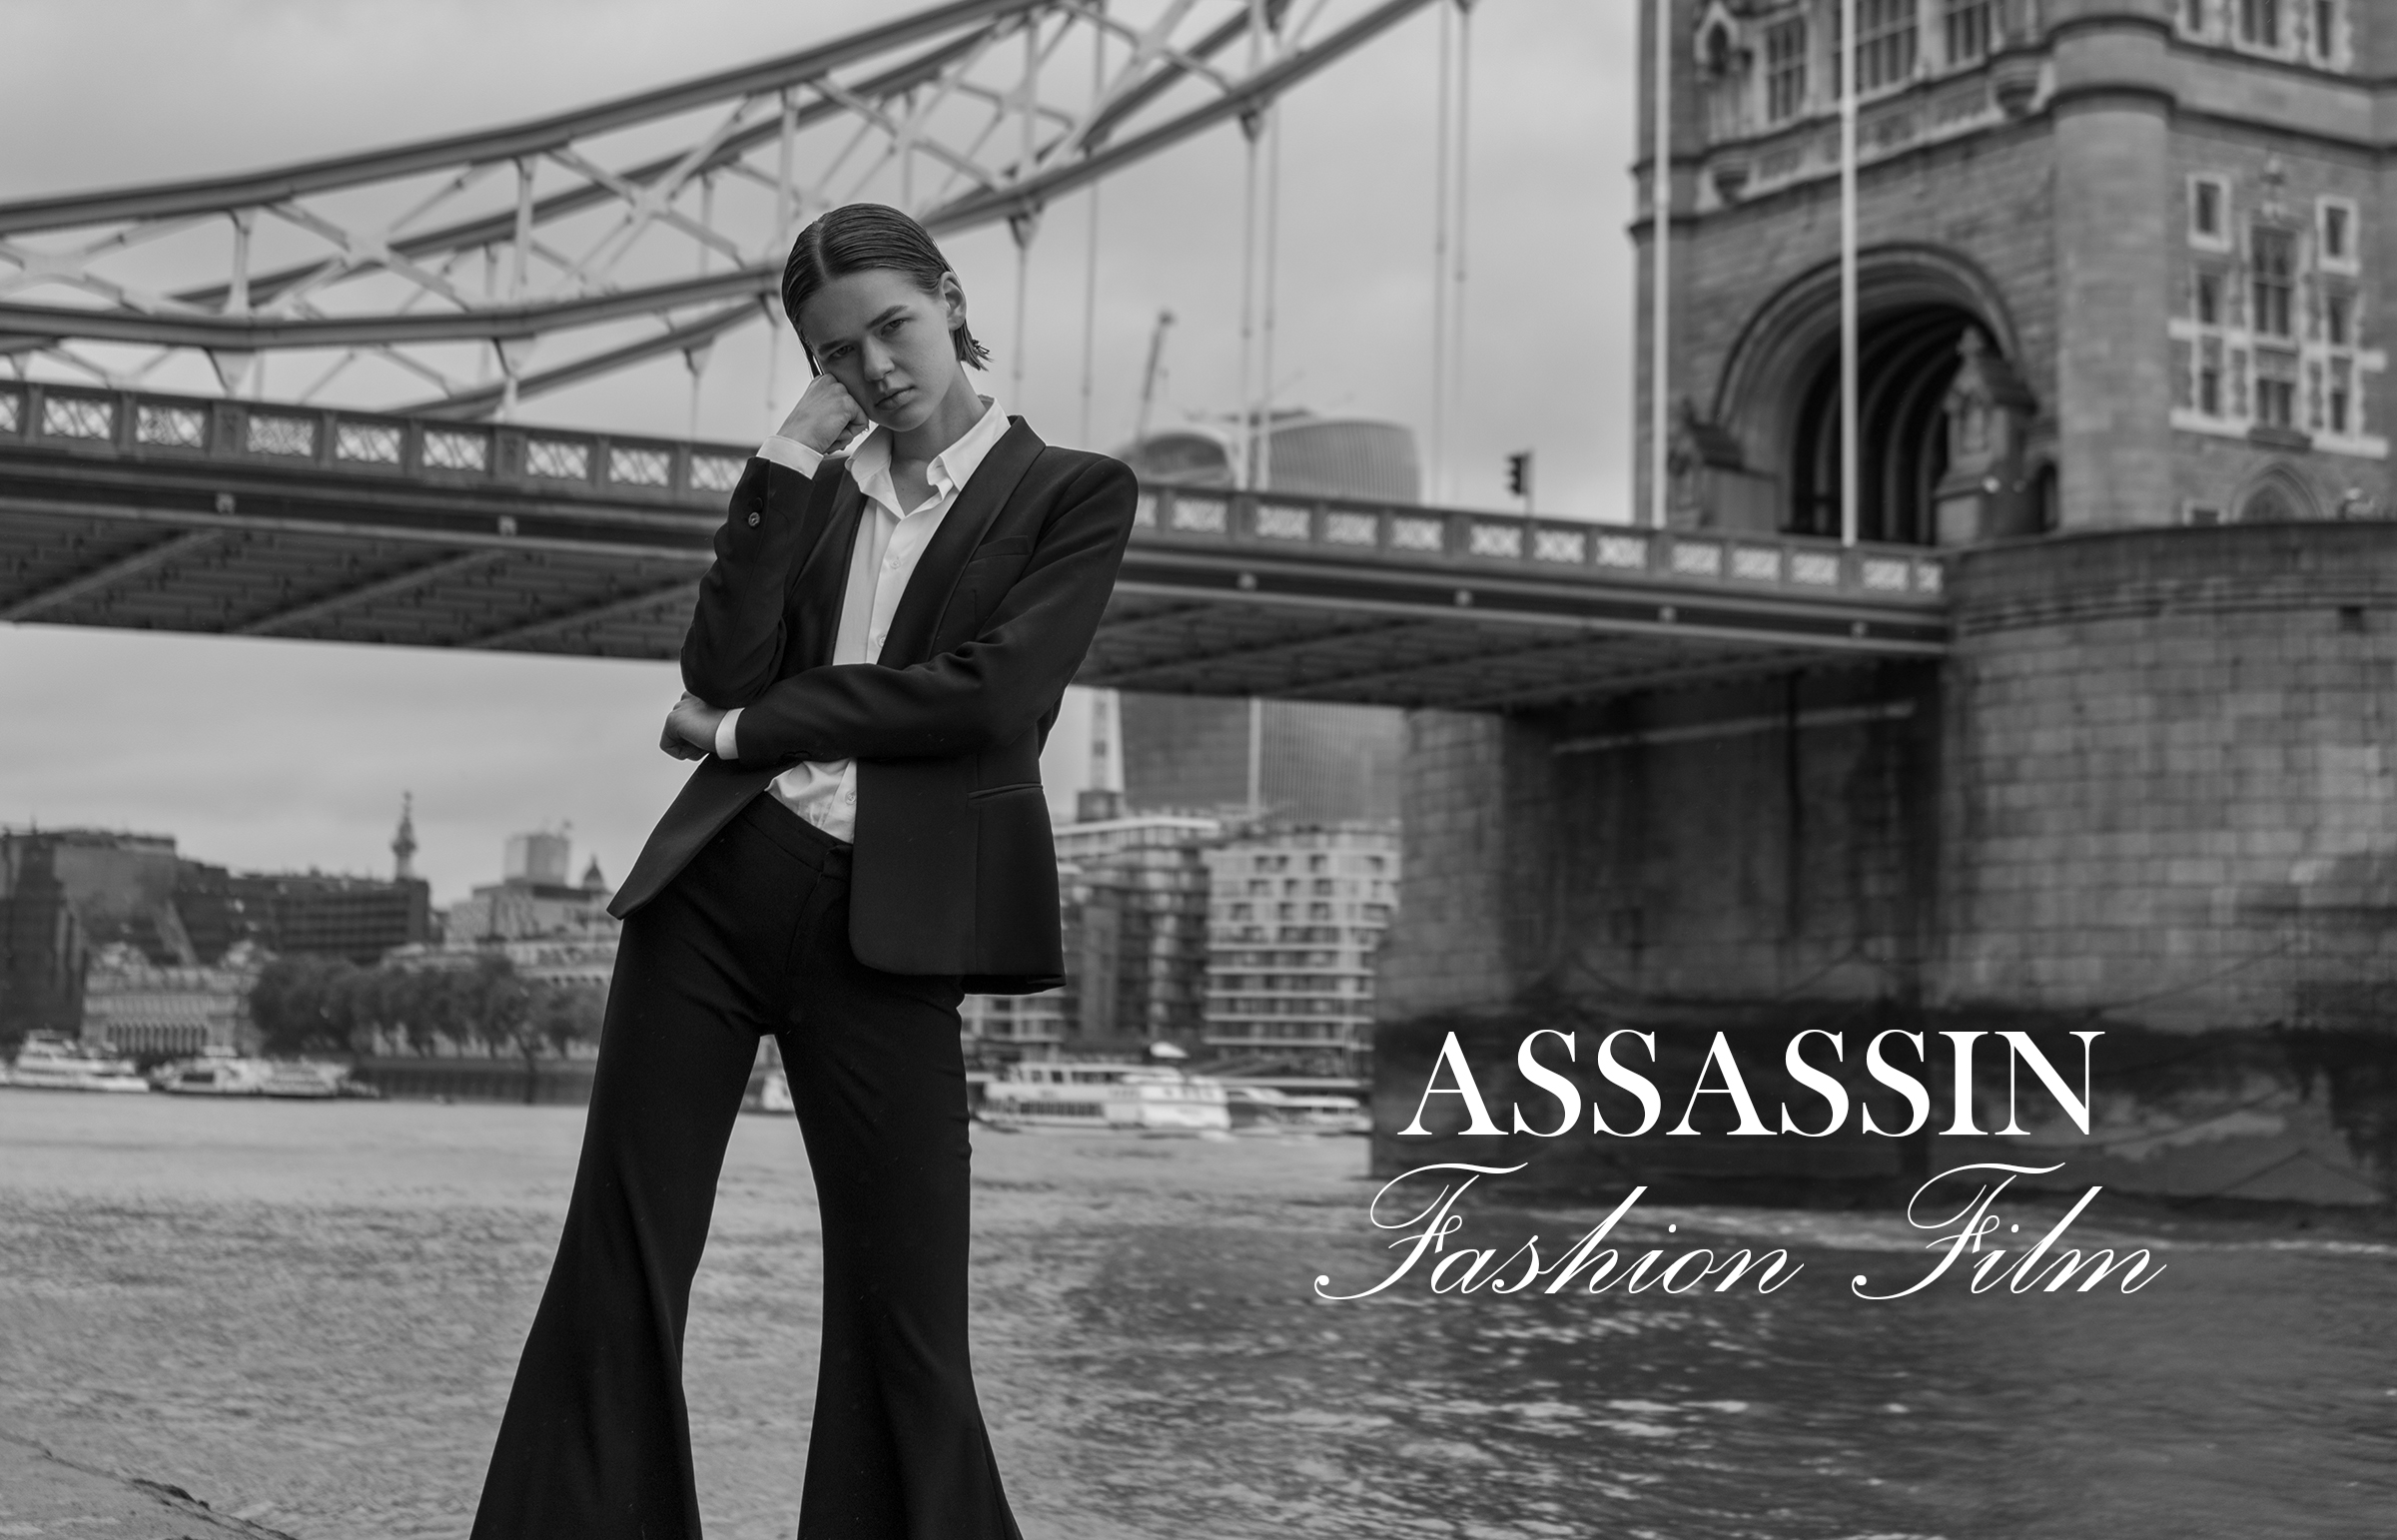 The Assassin by International Decoy